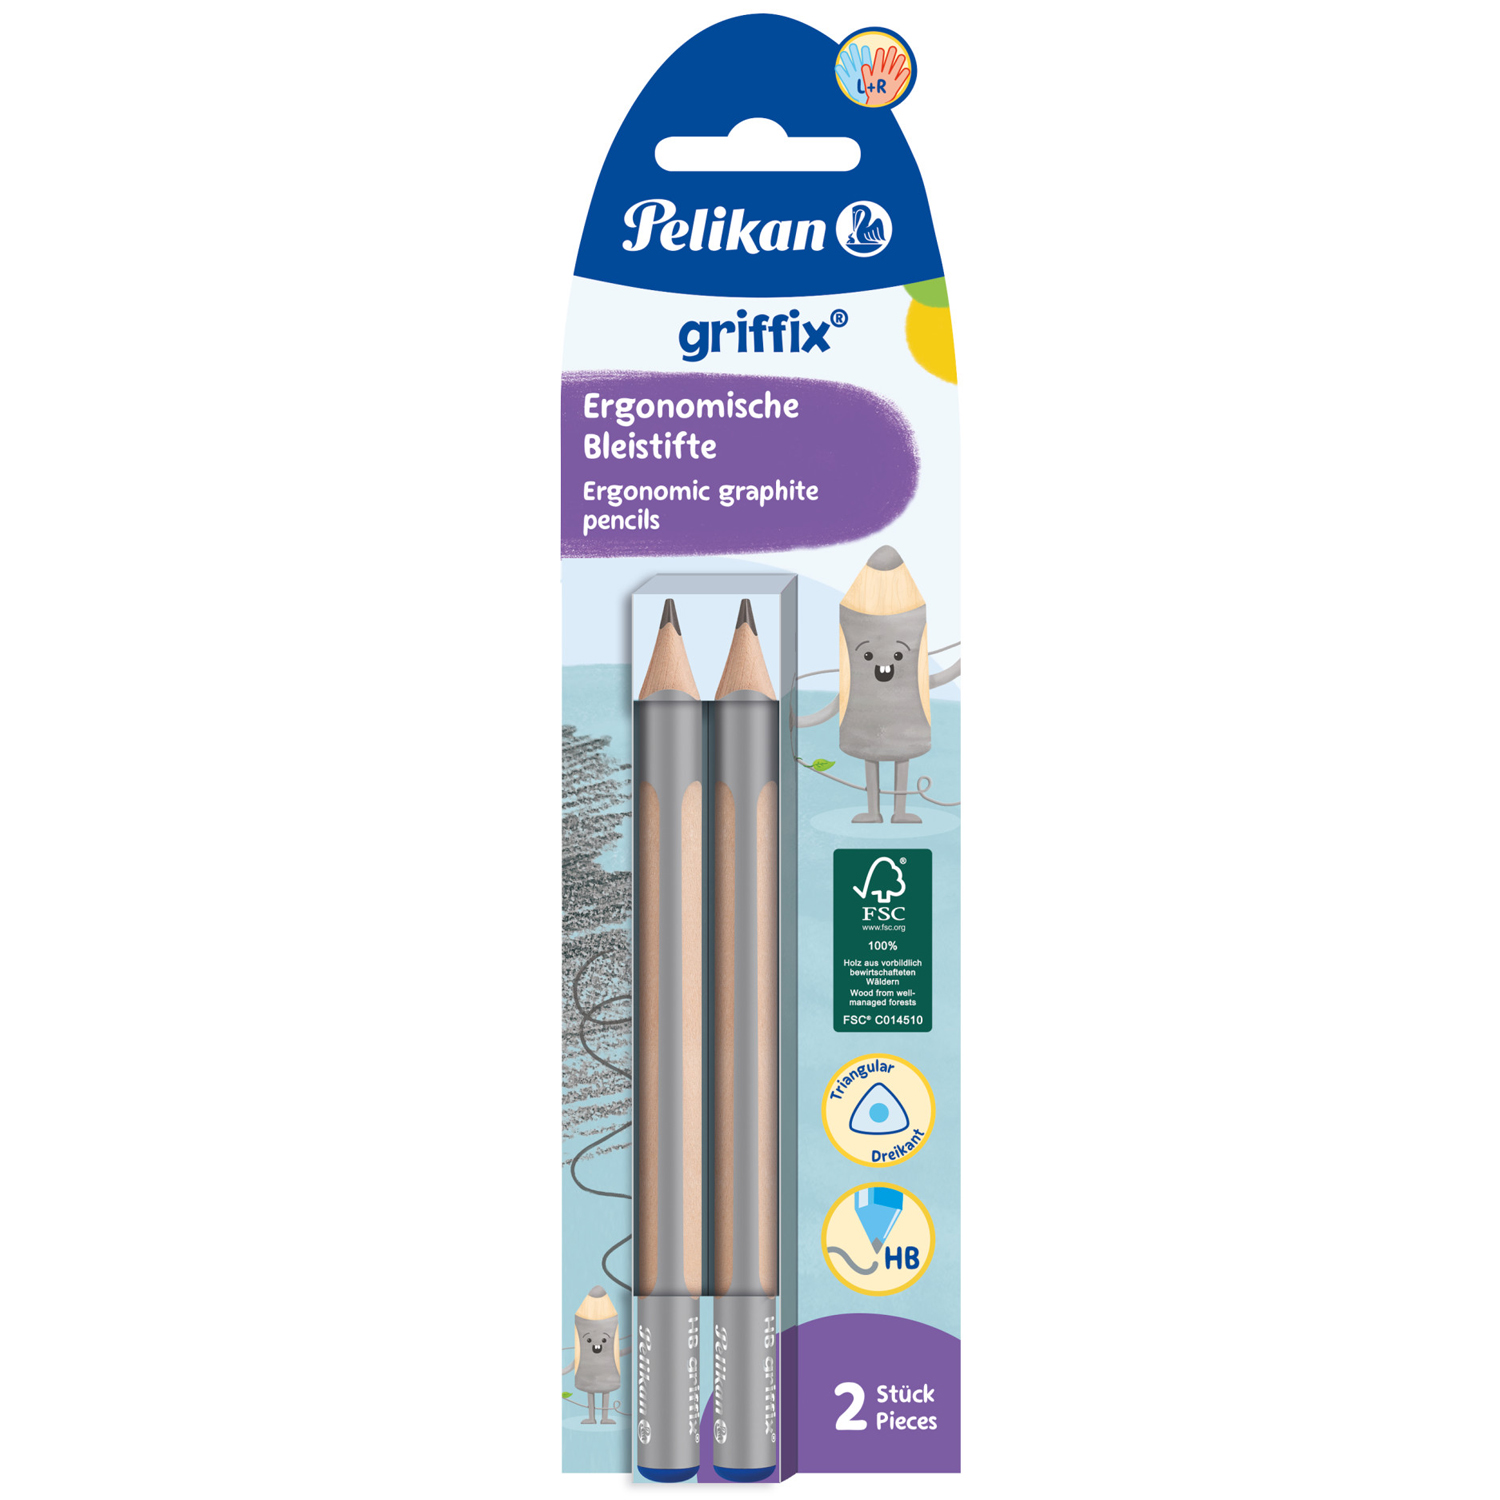 NEU Pelikan Griffix Ergonomische Bleistifte, 2 Stck, Strke HB